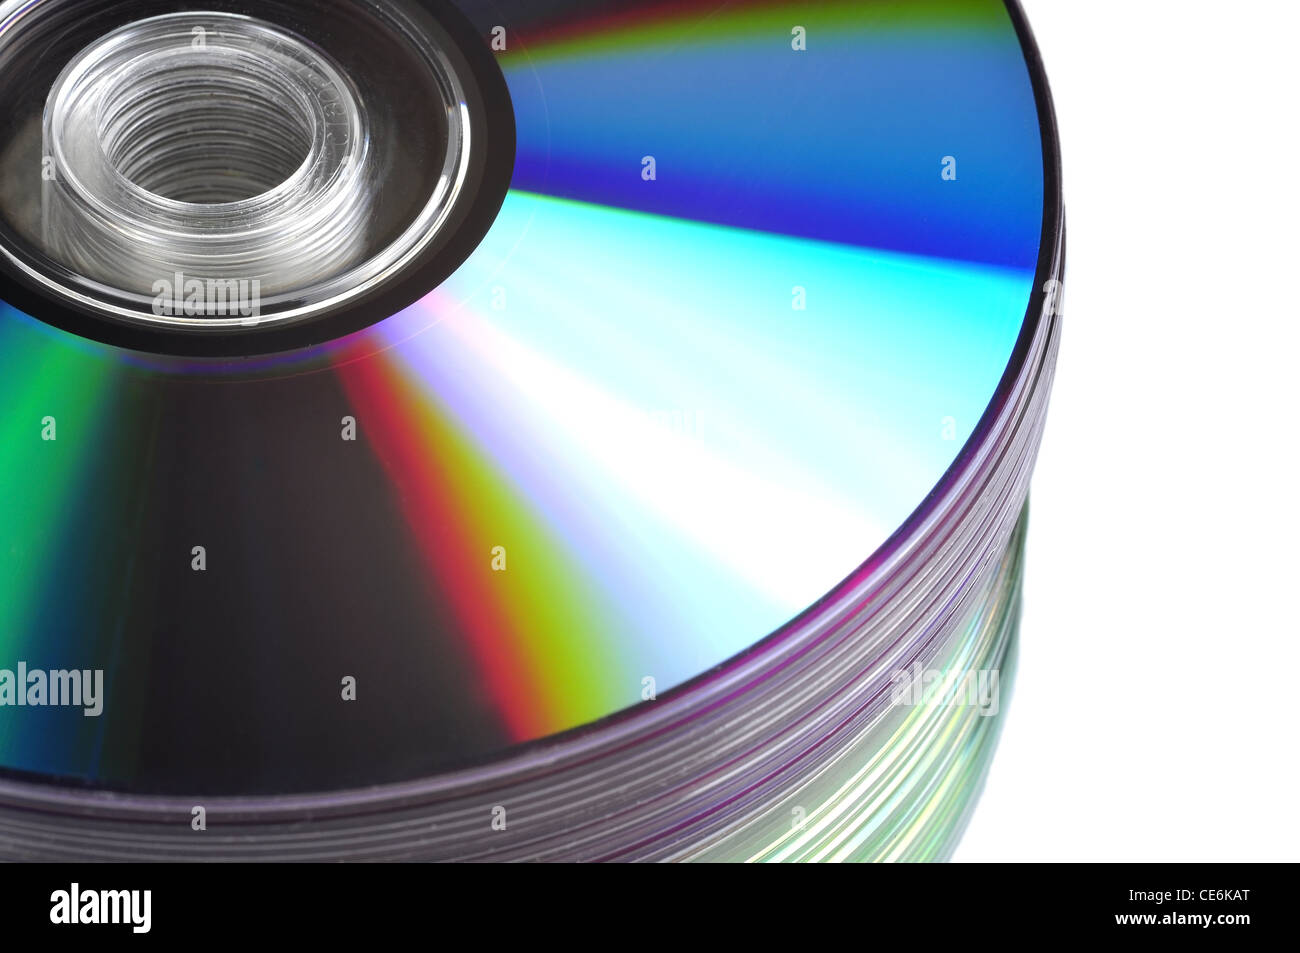 Lector dvd fotografías e imágenes de alta resolución - Alamy